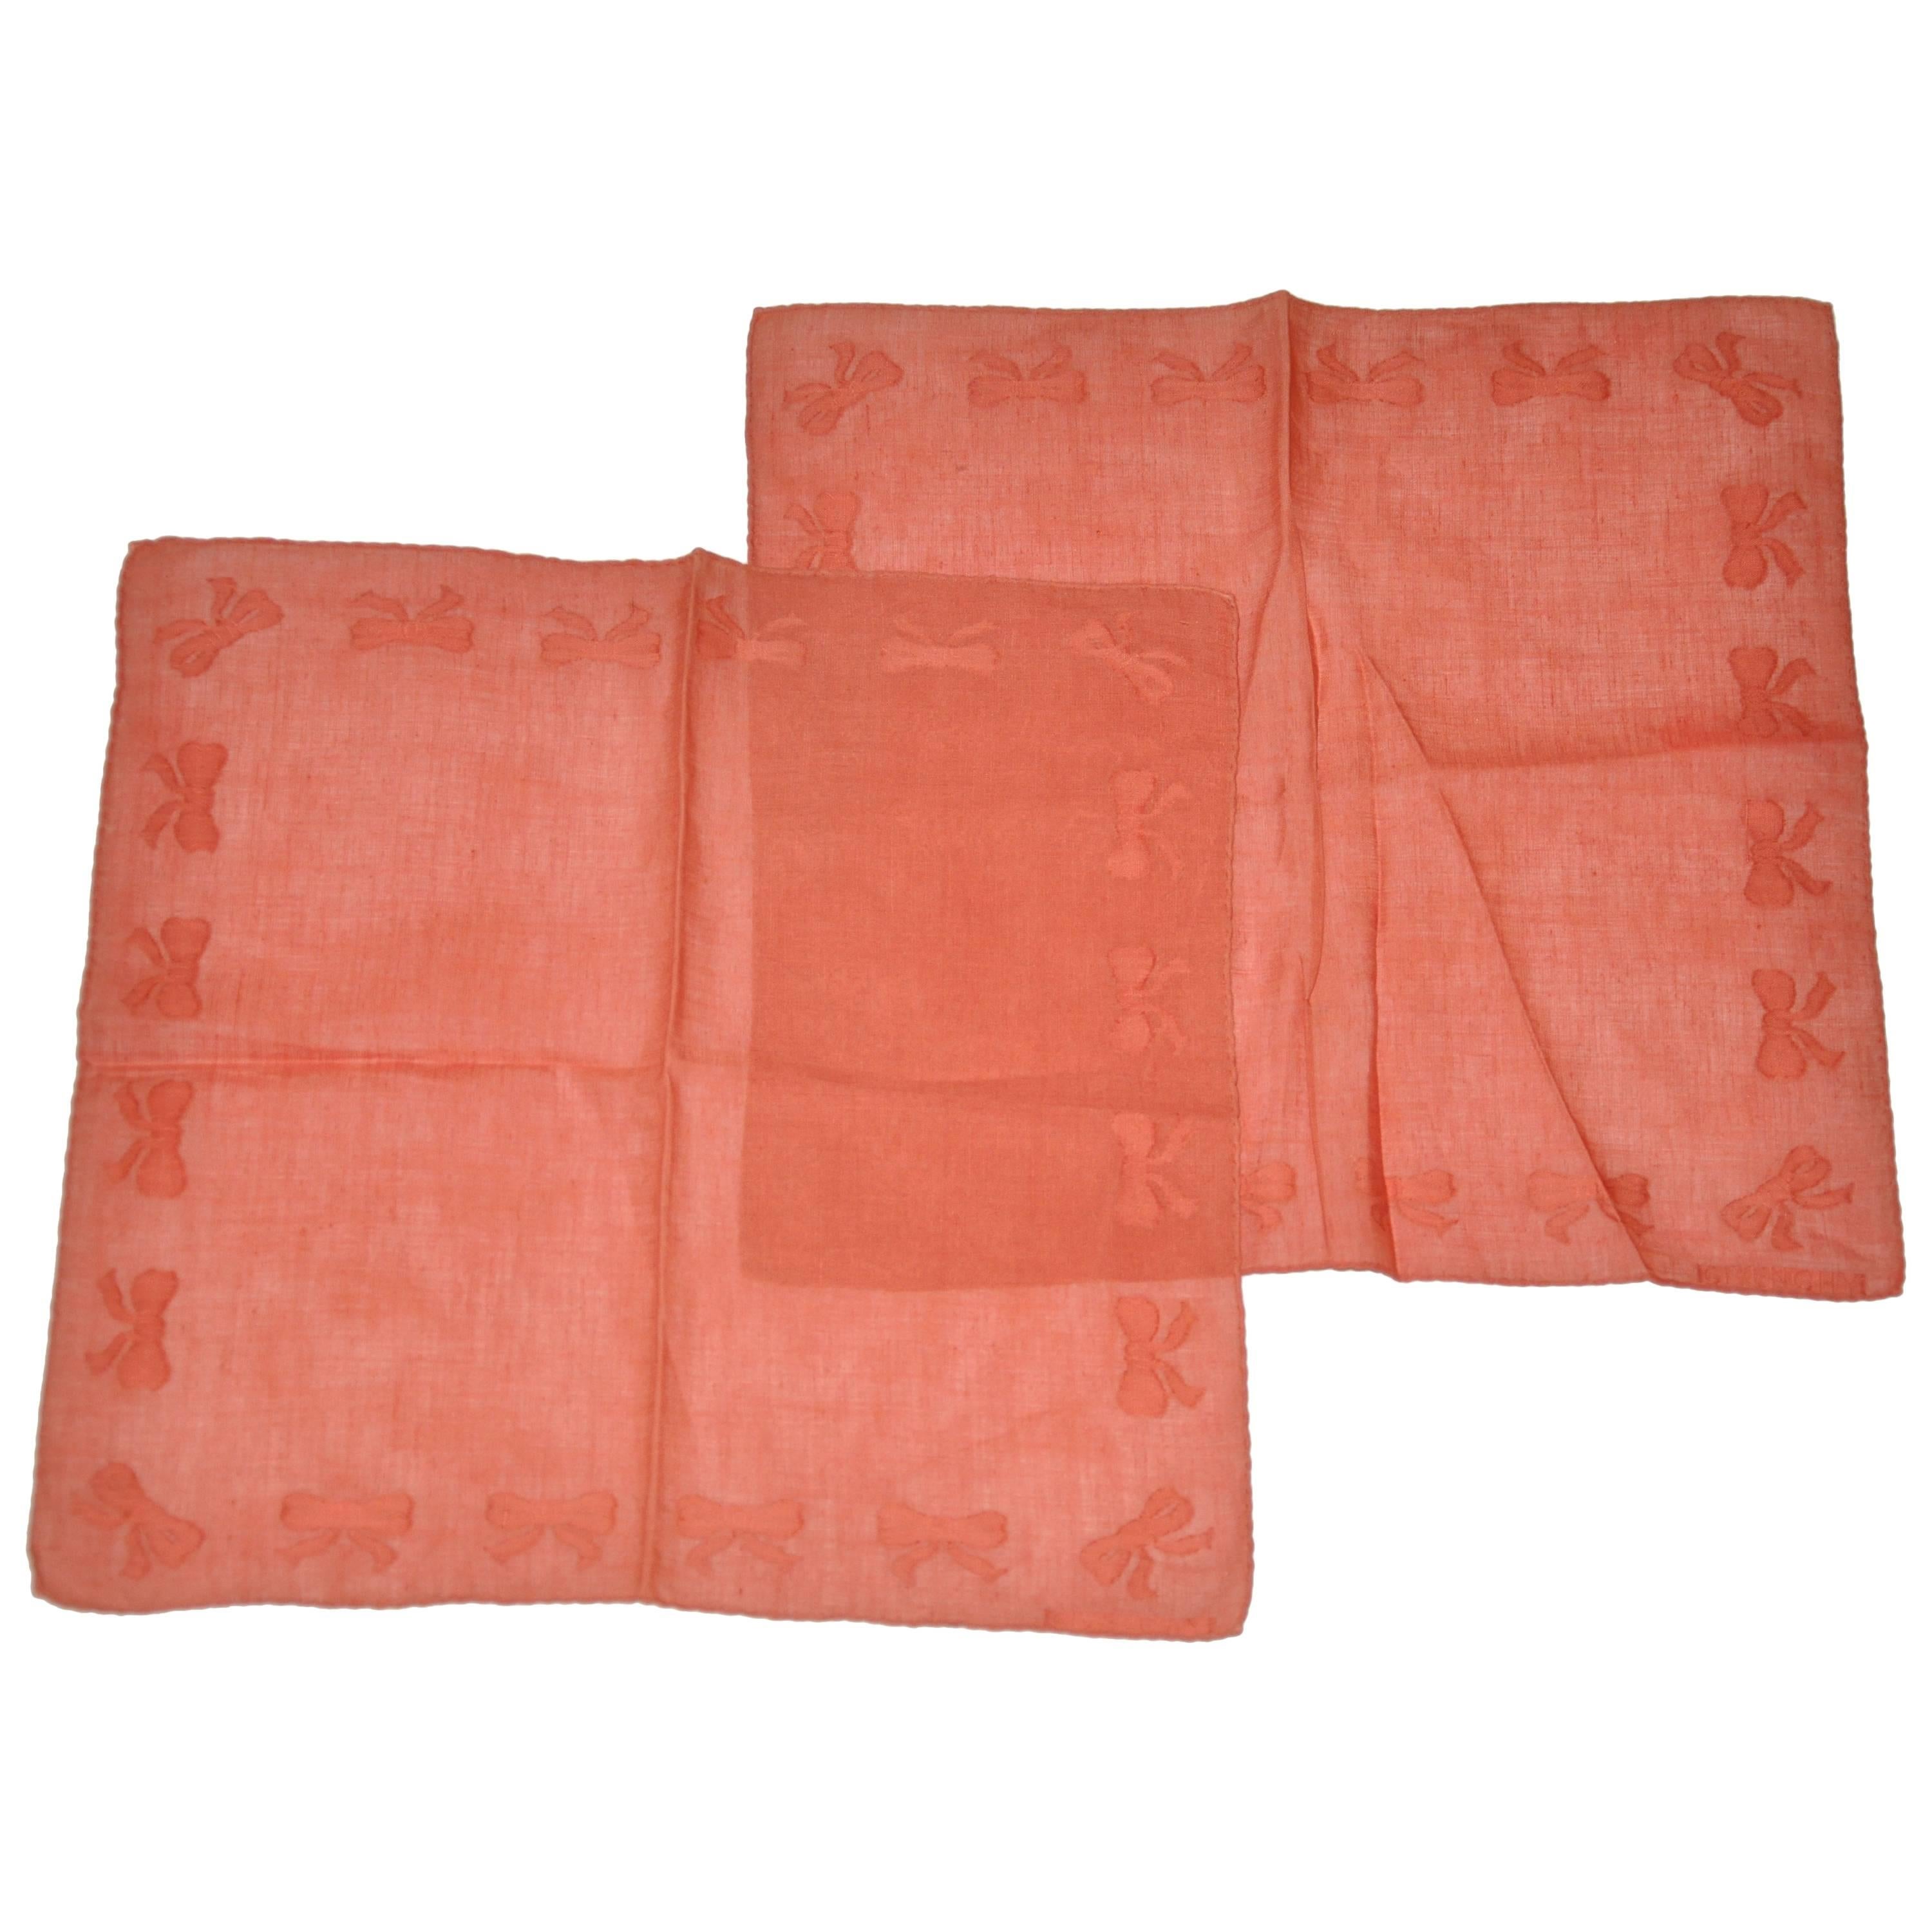 Givenchy set of Coral Linen "Bows" Men's Handkerchief